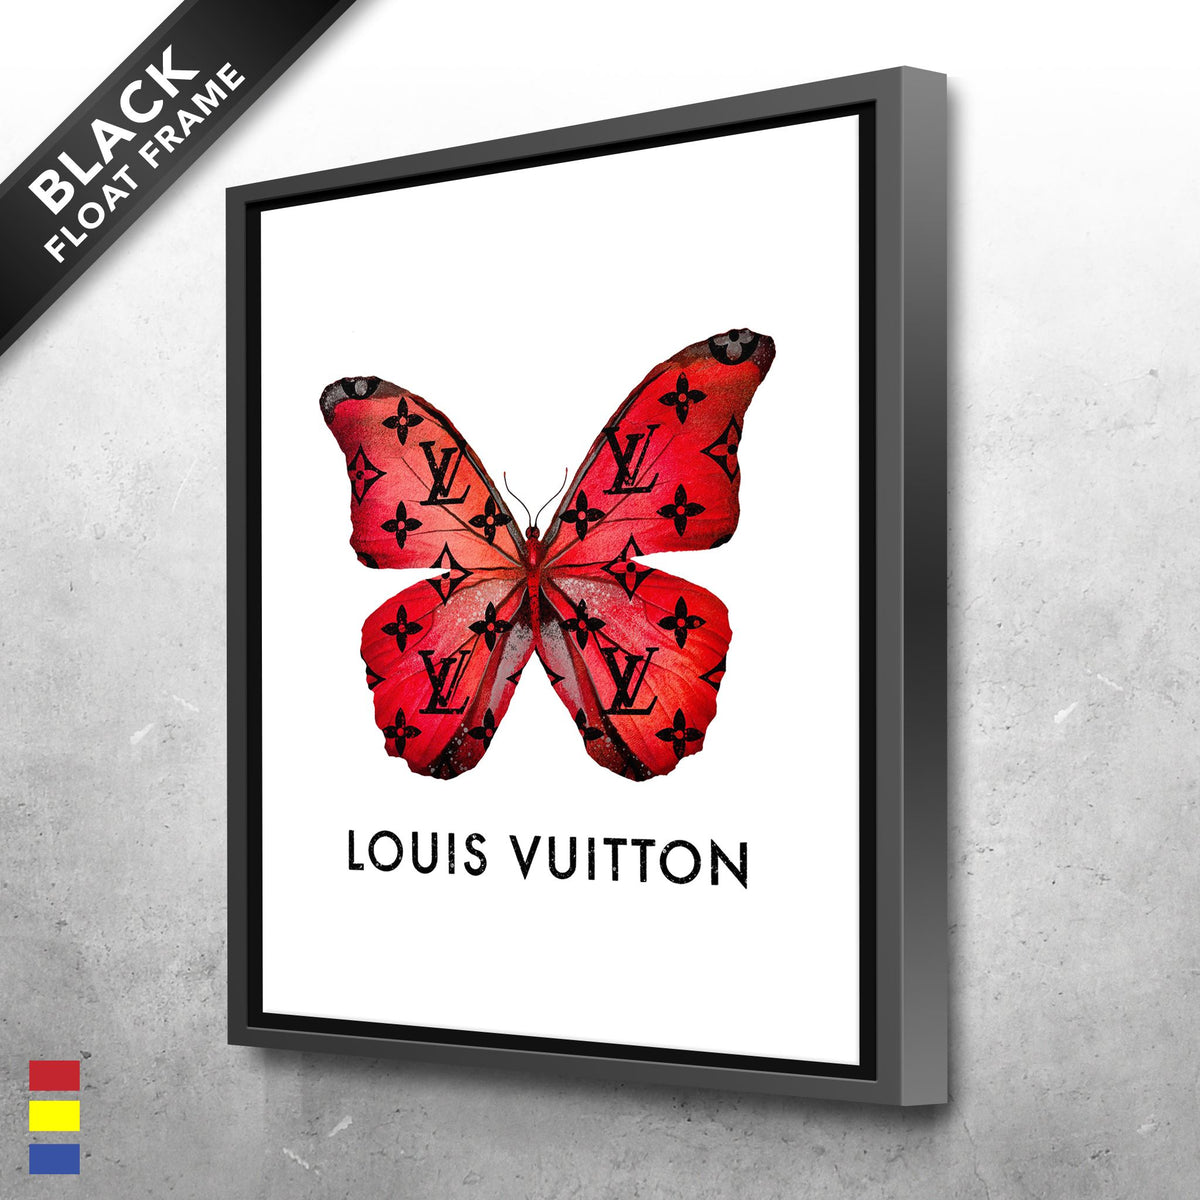 Louis Vuitton Pixel Art Wall Poster - Build Your Own with Bricks! - BRIK